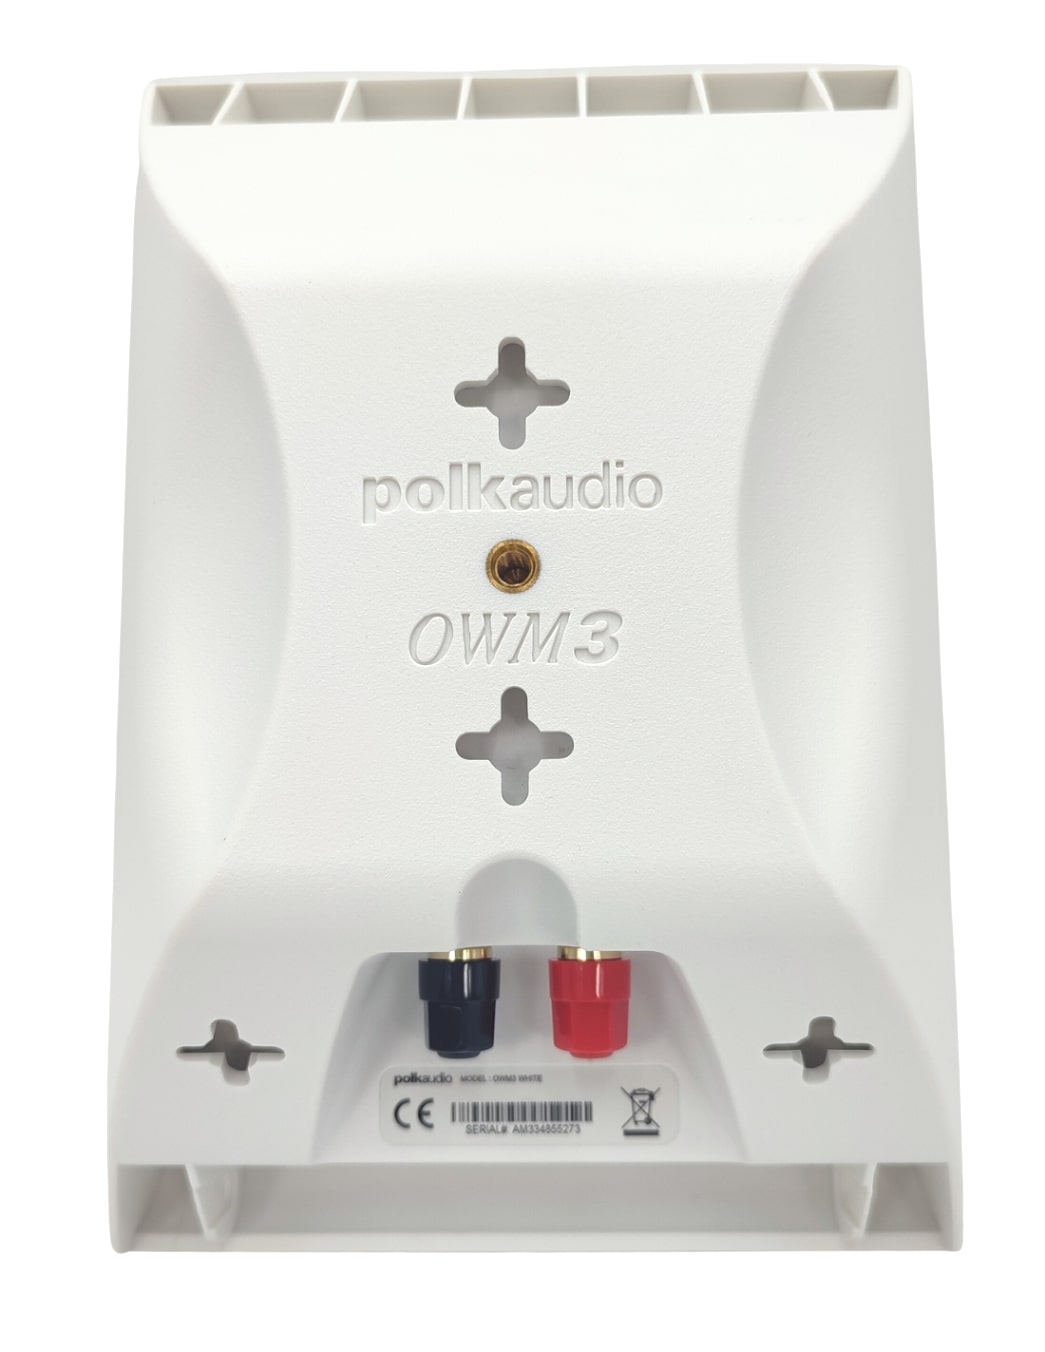 Polk Audio OWM3 White back